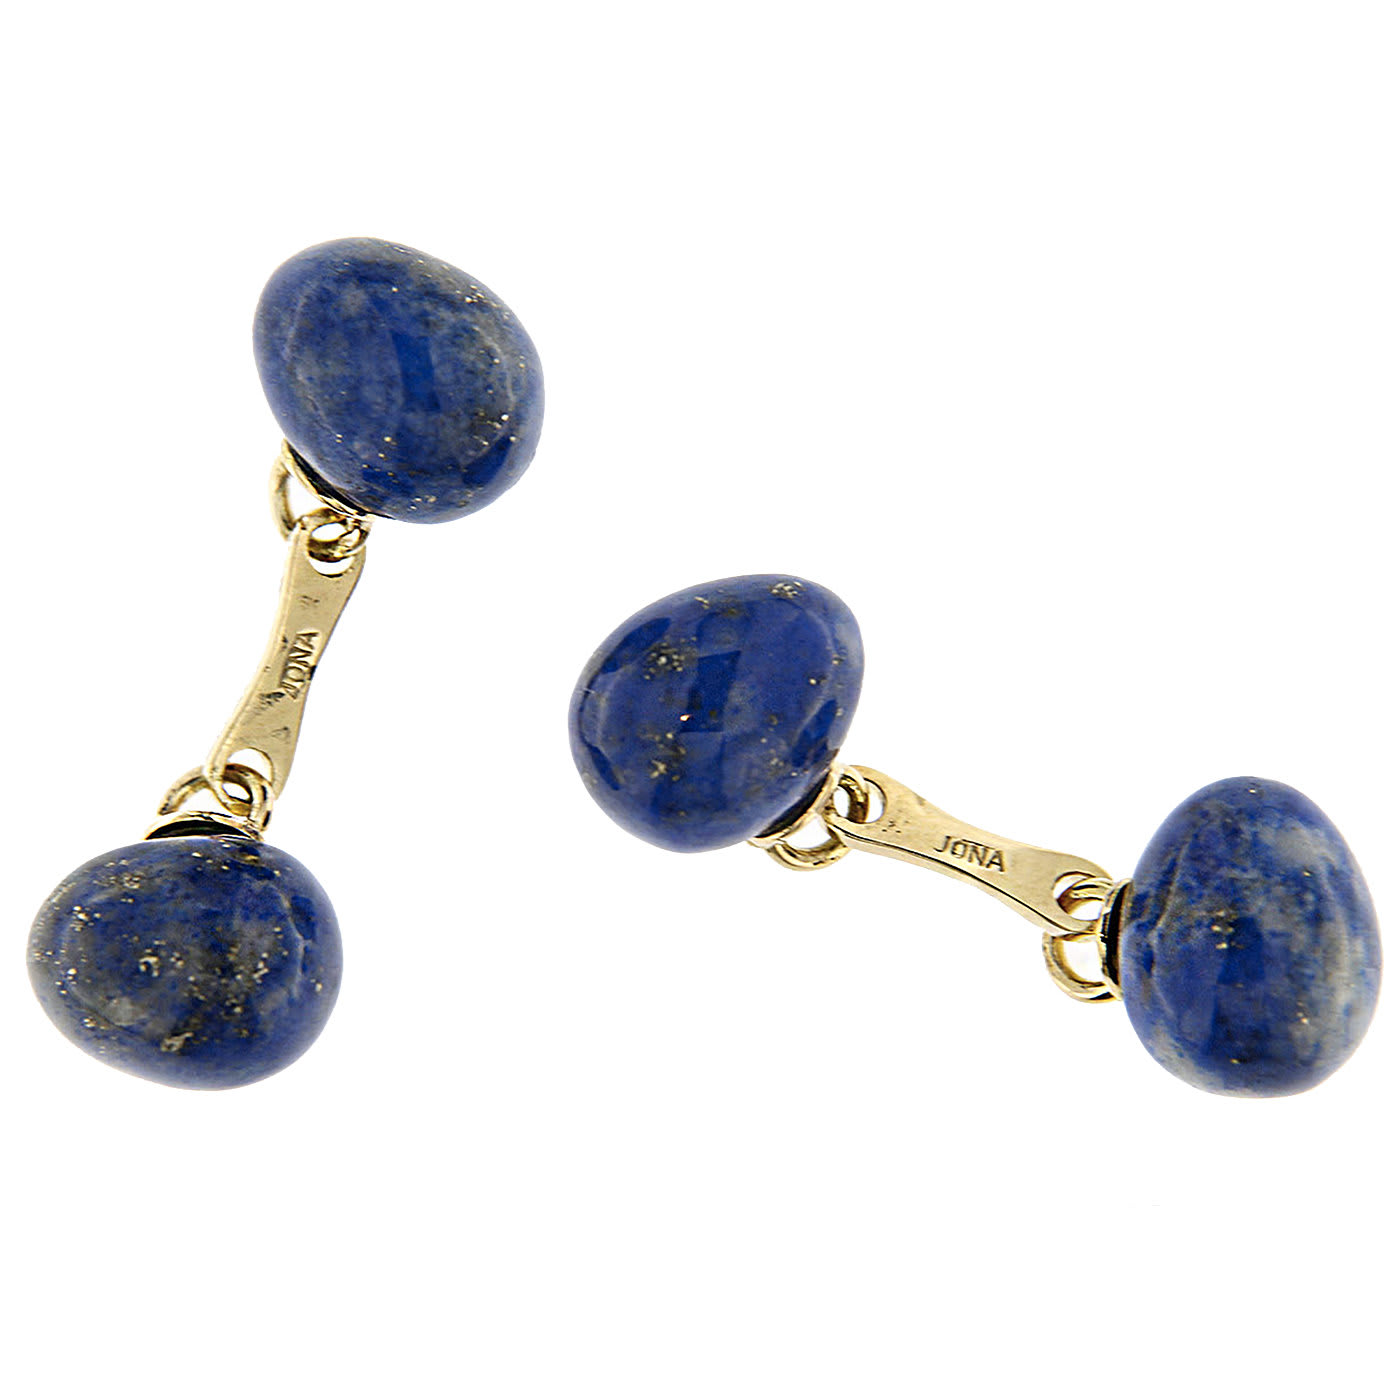 Lapis Lazuli and Gold Egg Cufflinks - Alex Jona